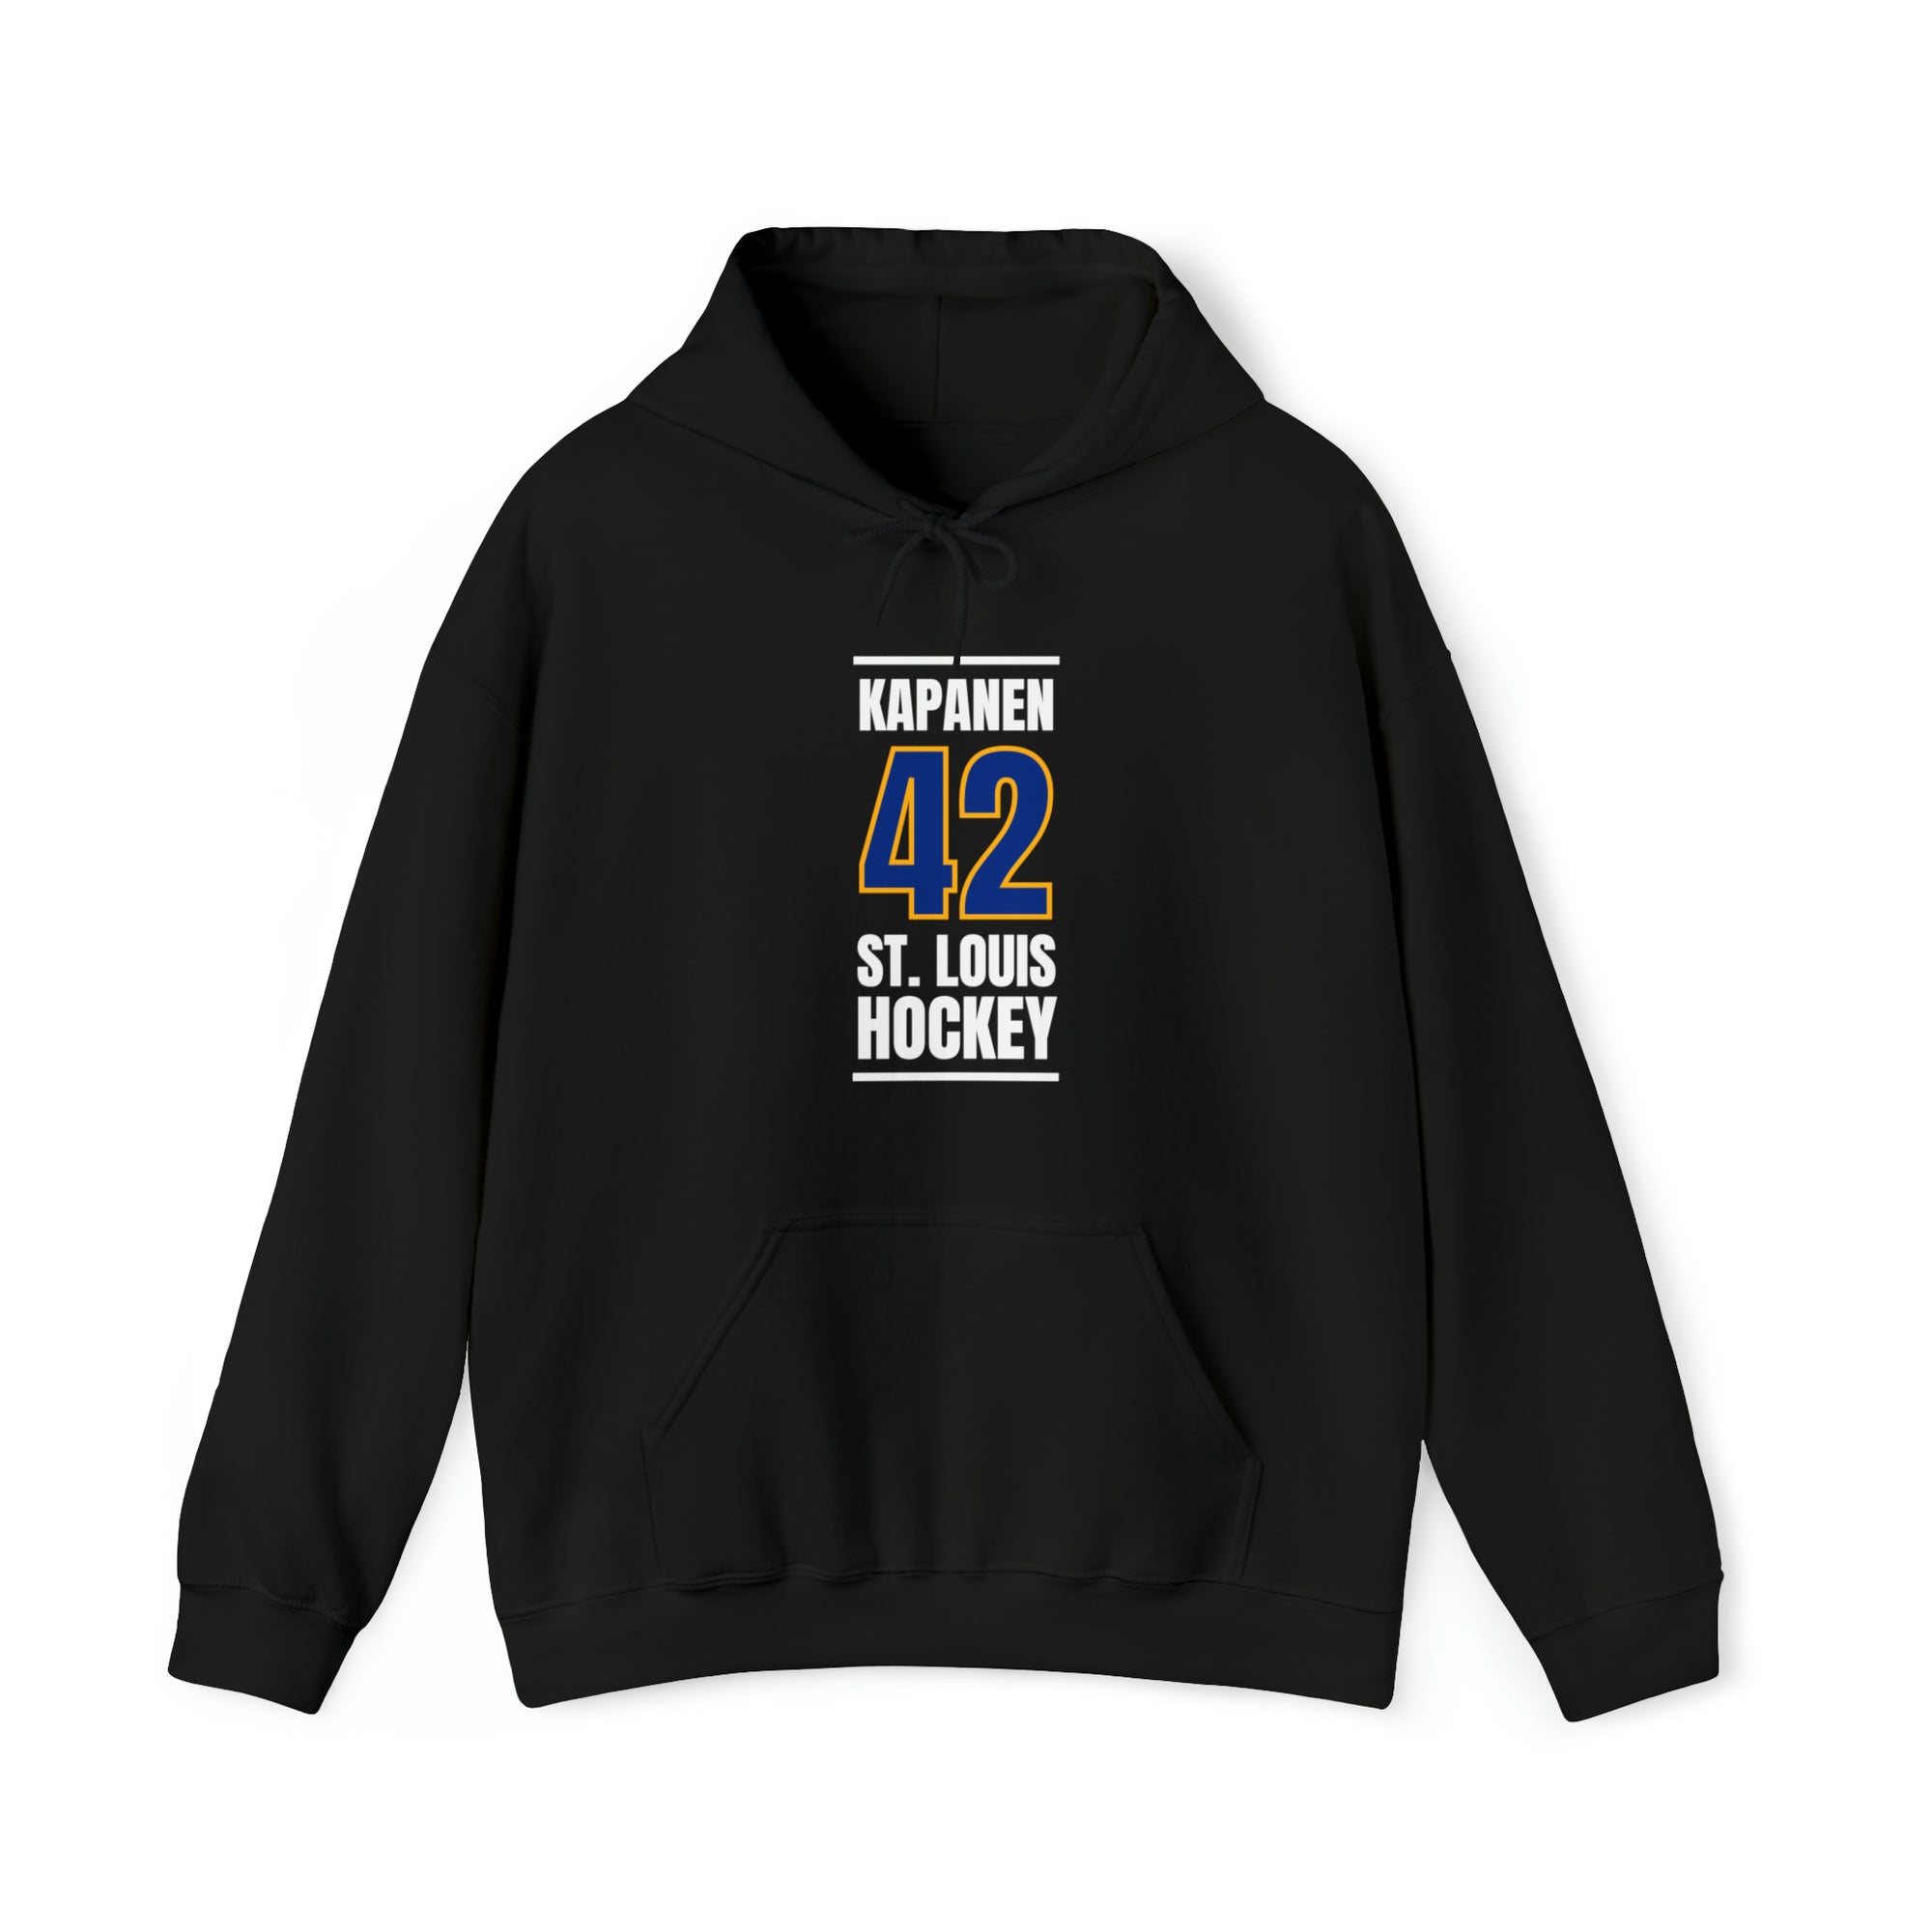 Kapanen 42 St. Louis Hockey Blue Vertical Design Unisex Hooded Sweatshirt